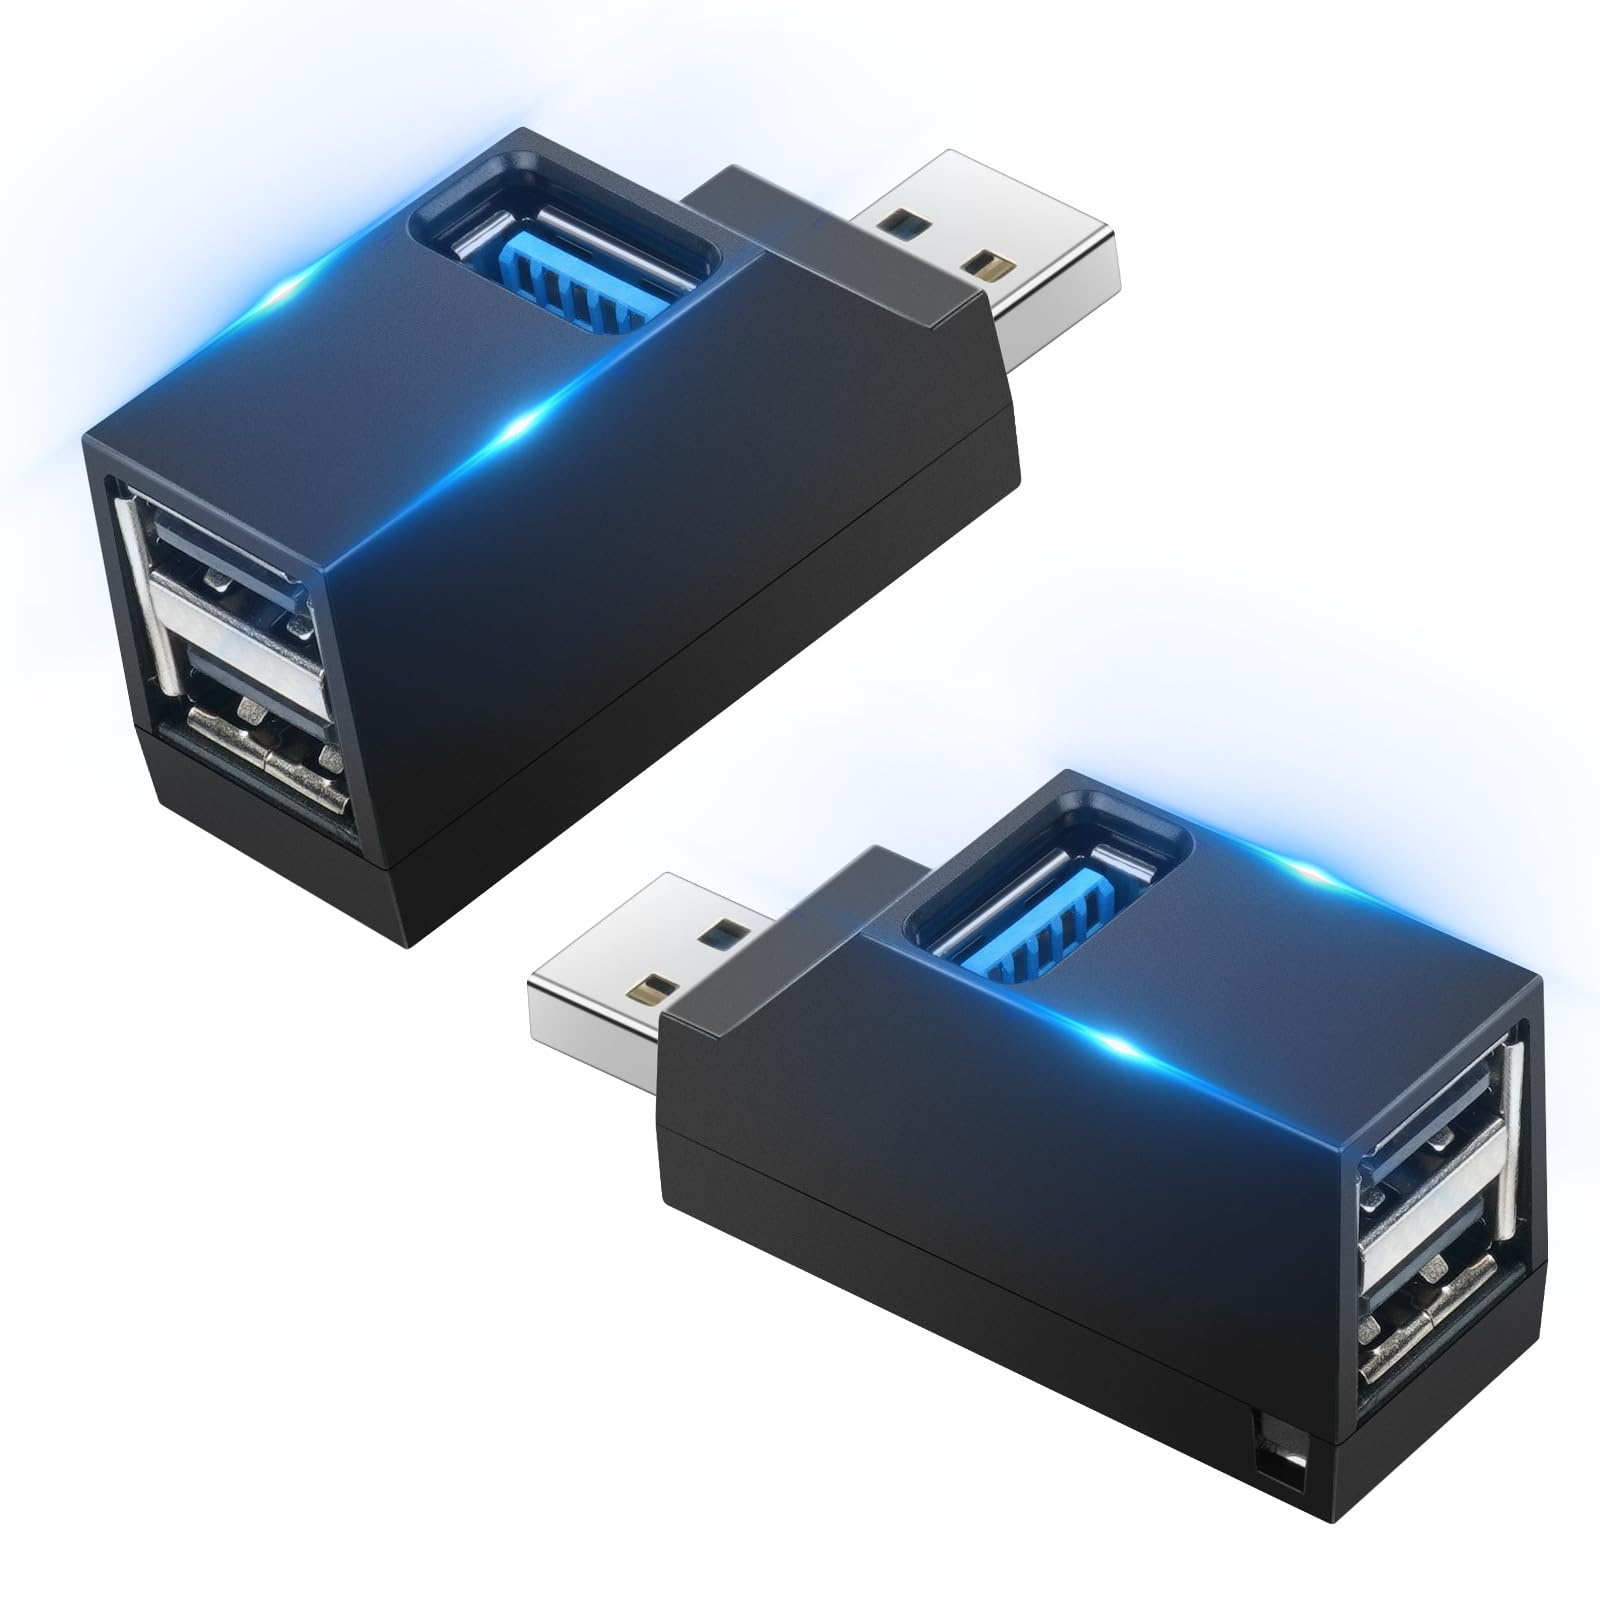 AXFEE 3 Port USB 3.0 Hub, Mini USB-Hub mit Mehreren USB-Anschlüssen 1 USB 3.0+2 USB 2.0, USB Splitter Erweiterung Adapter, Datenhub für Laptop MacBook Desktop-PC kompatibel mit Flash-Laufwerk Tastatur